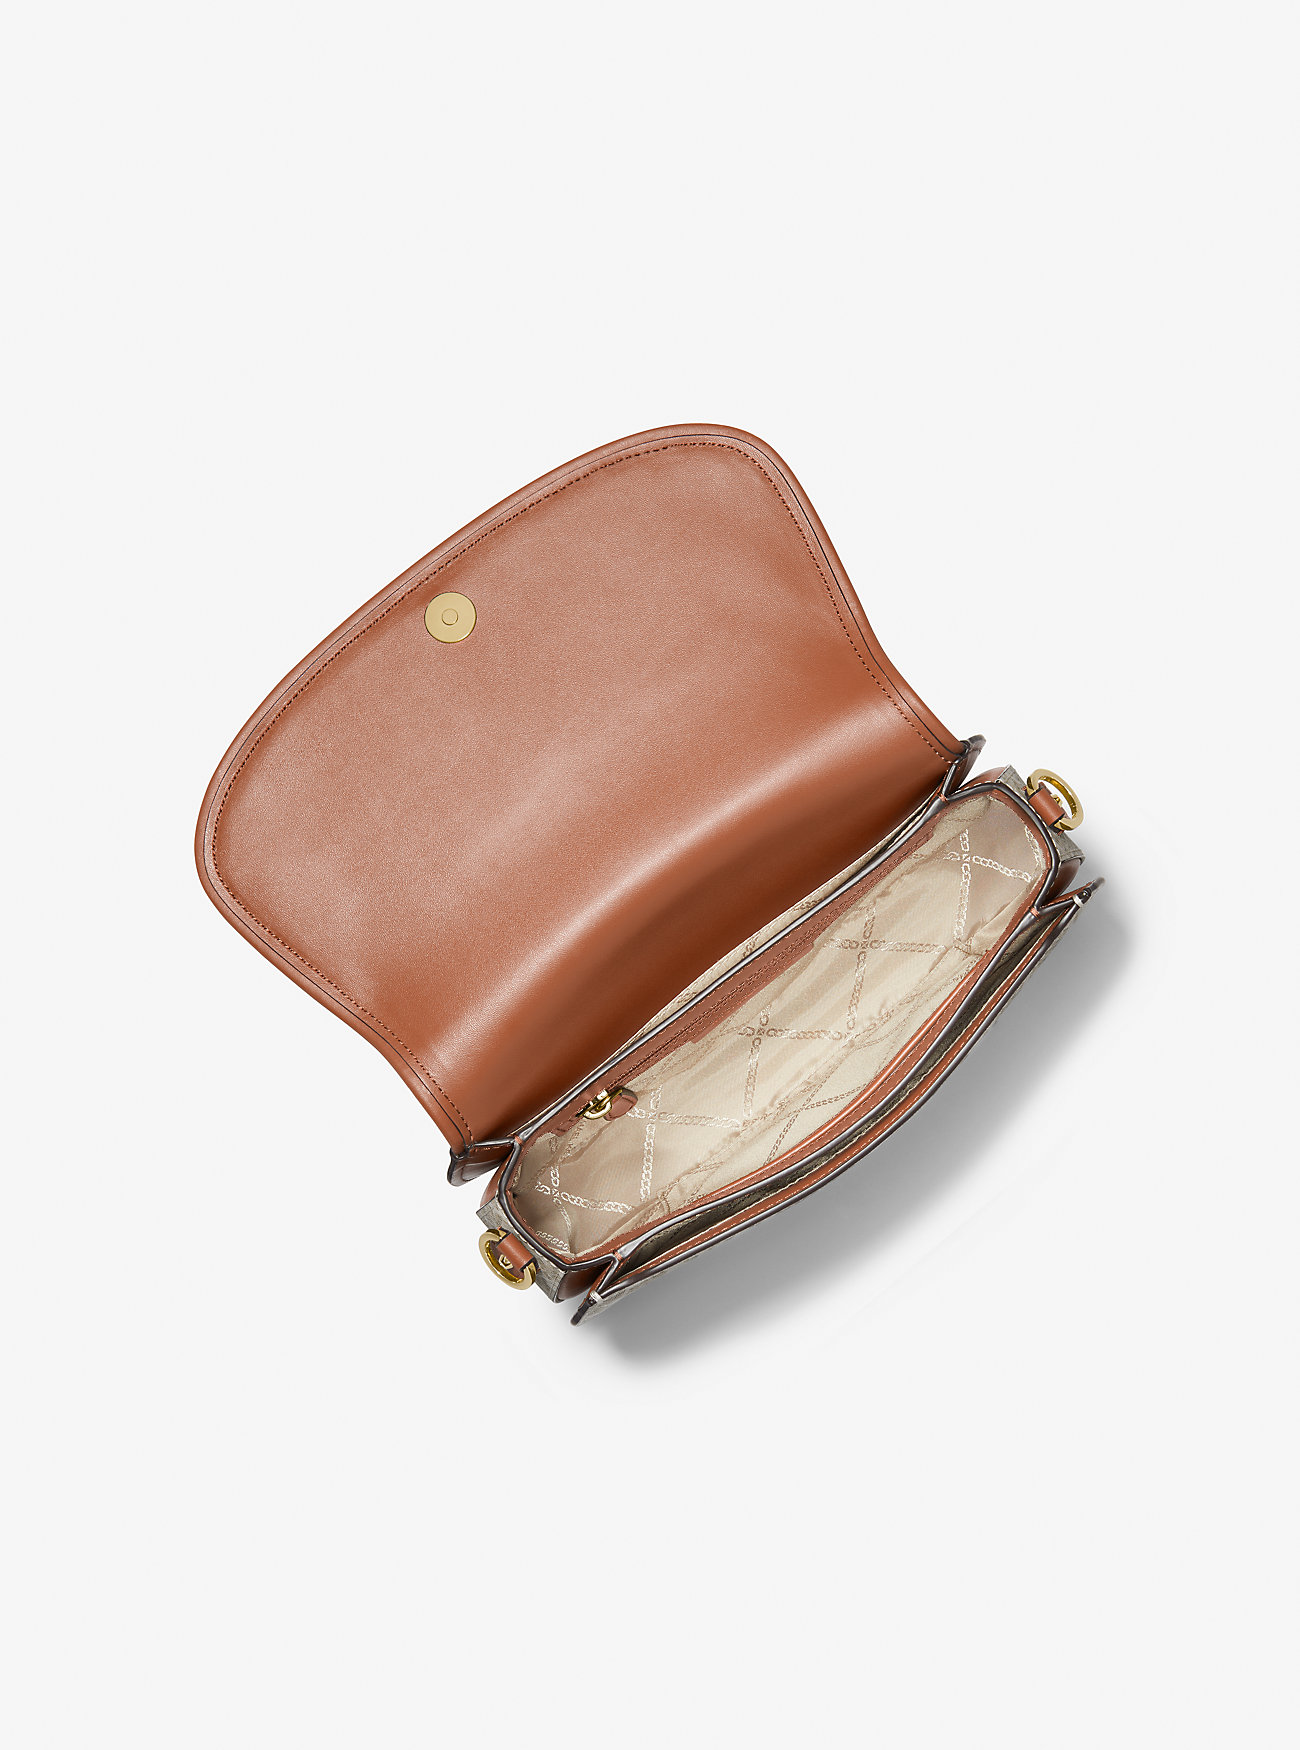 Michael Kors Mila Signature Logo Micro Crossbody Bag - Vanilla/Luggage